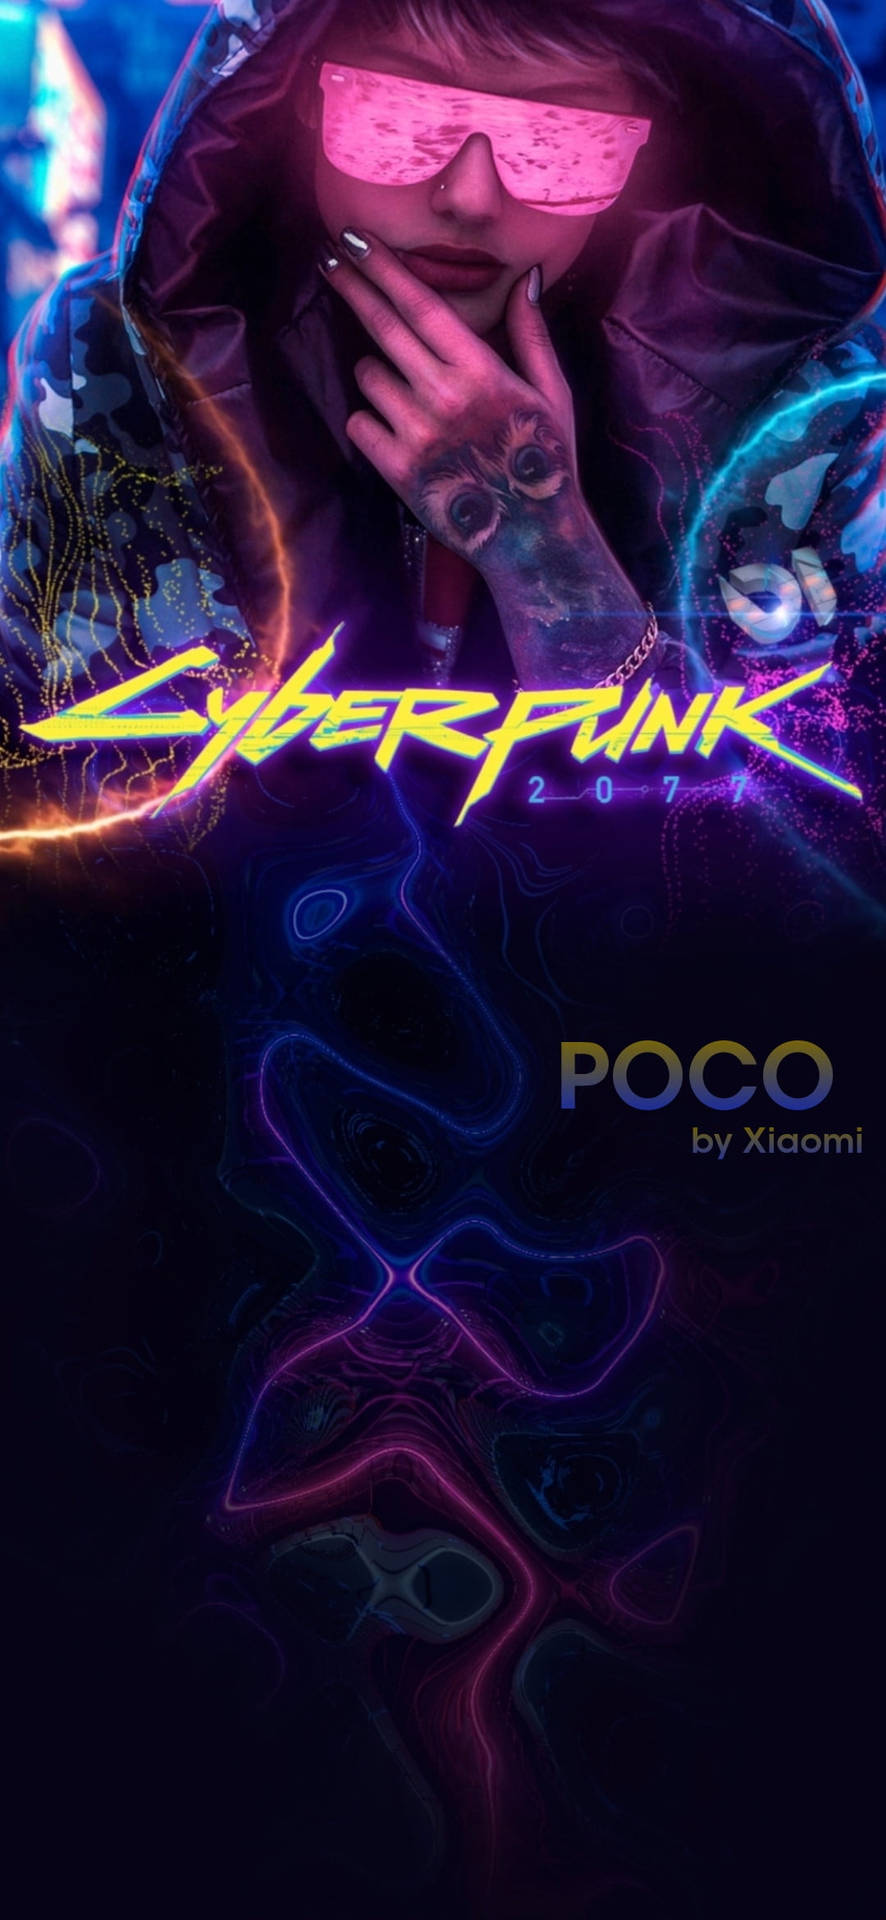 POCO X2 Cyberpunk fra Xiaomi Wallpaper